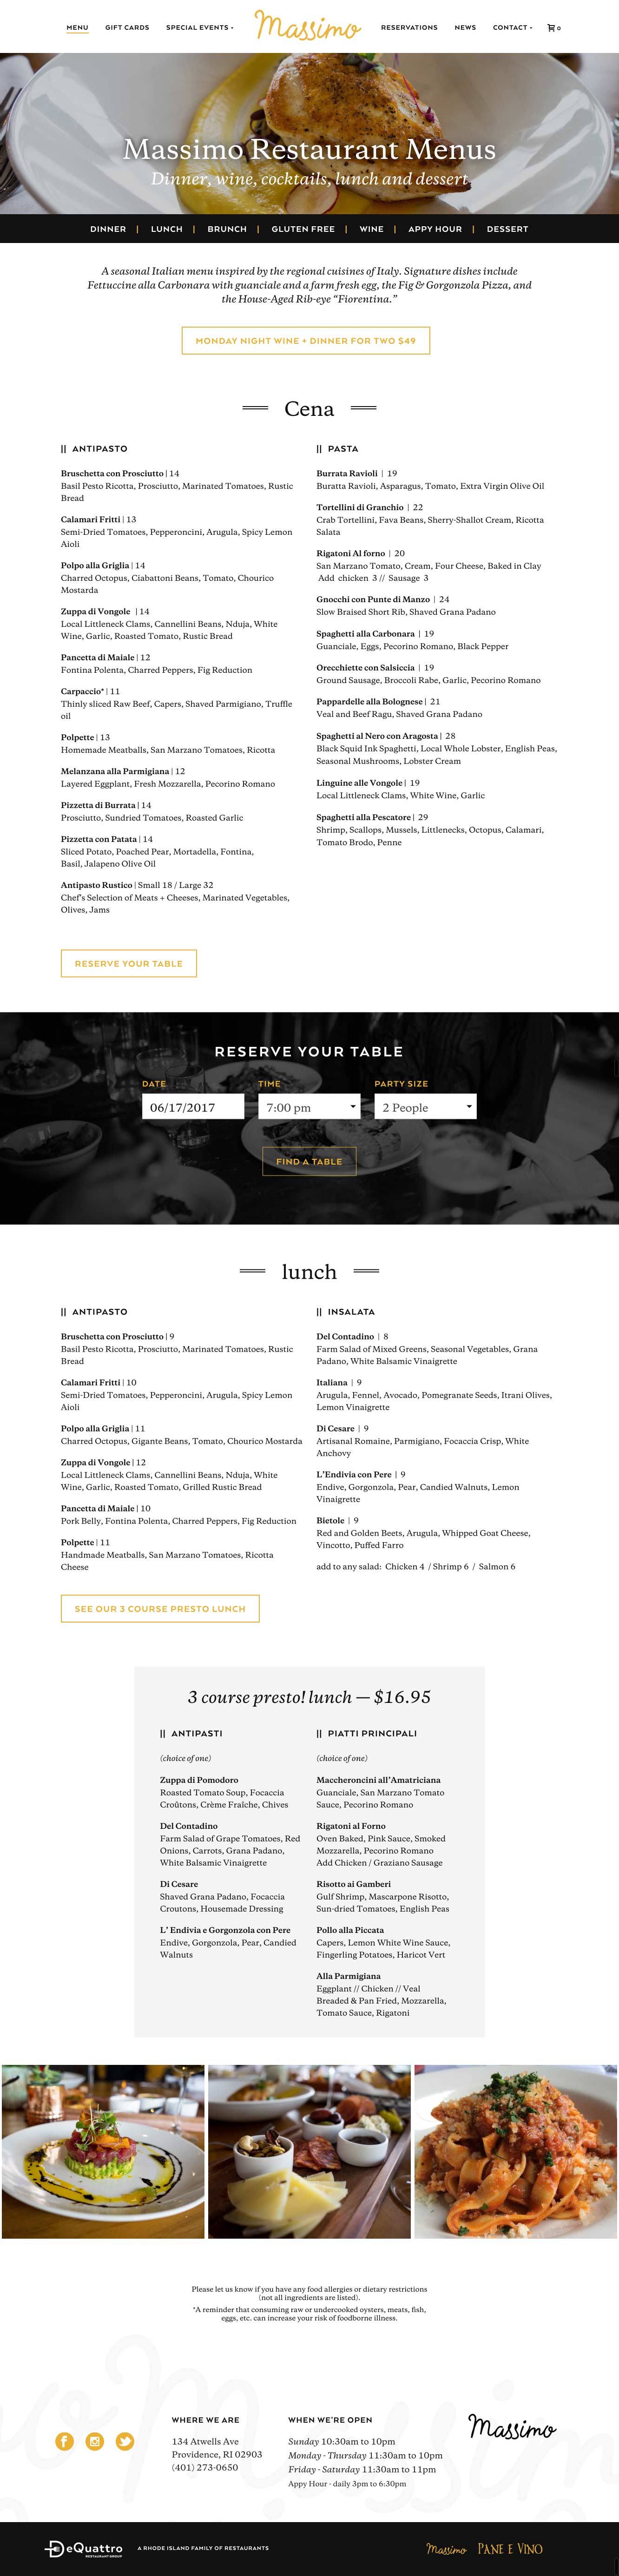 RI restaurant website design and development